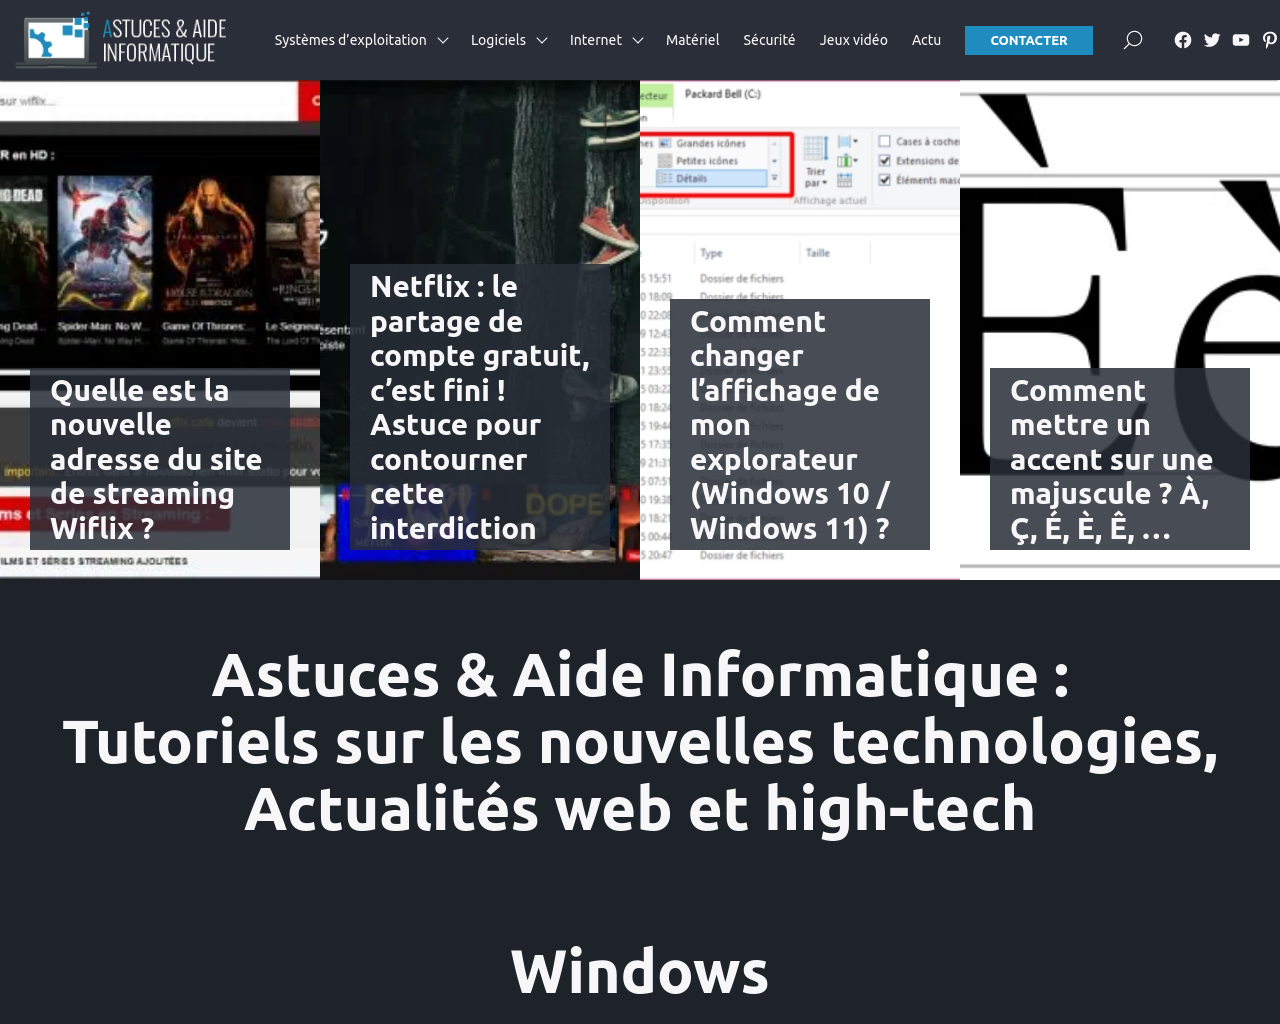 www.astuces-aide-informatique.info